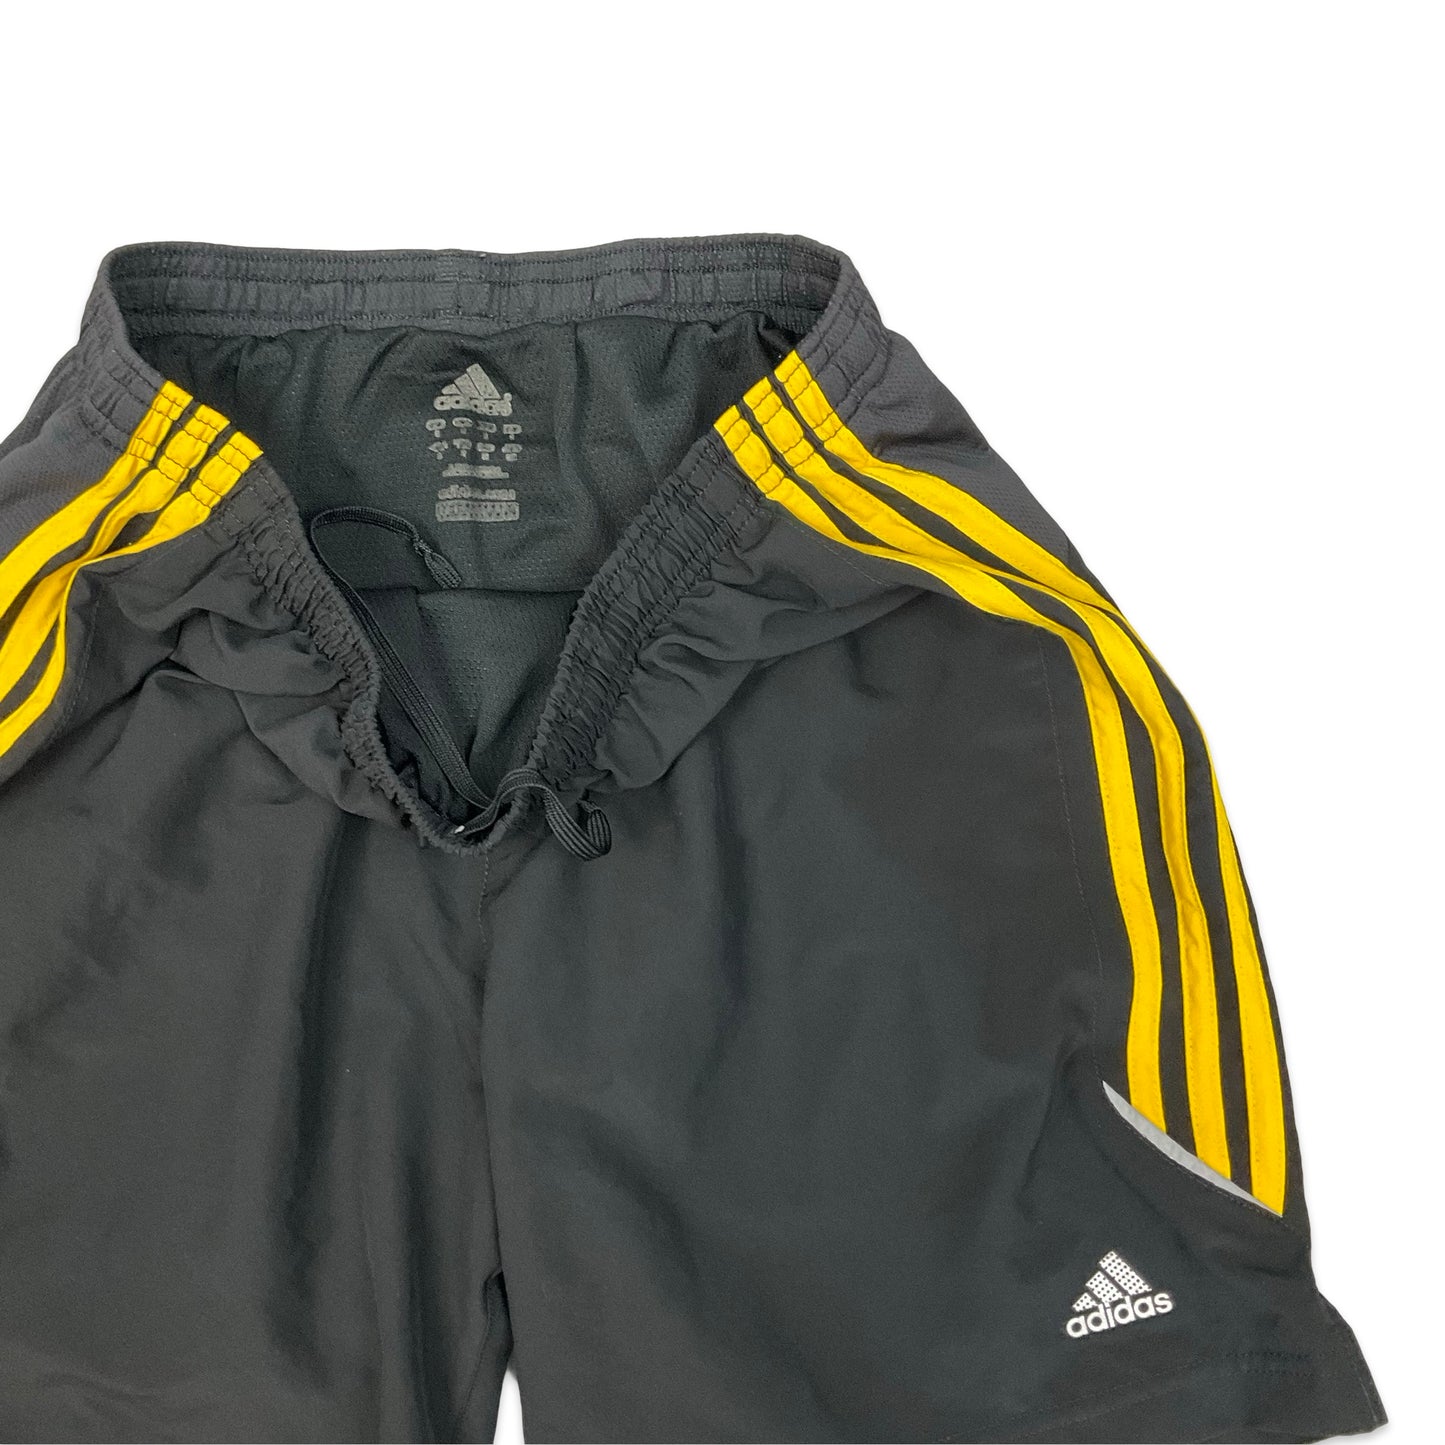 00's Adidas Black & Yellow Sport Shorts S M